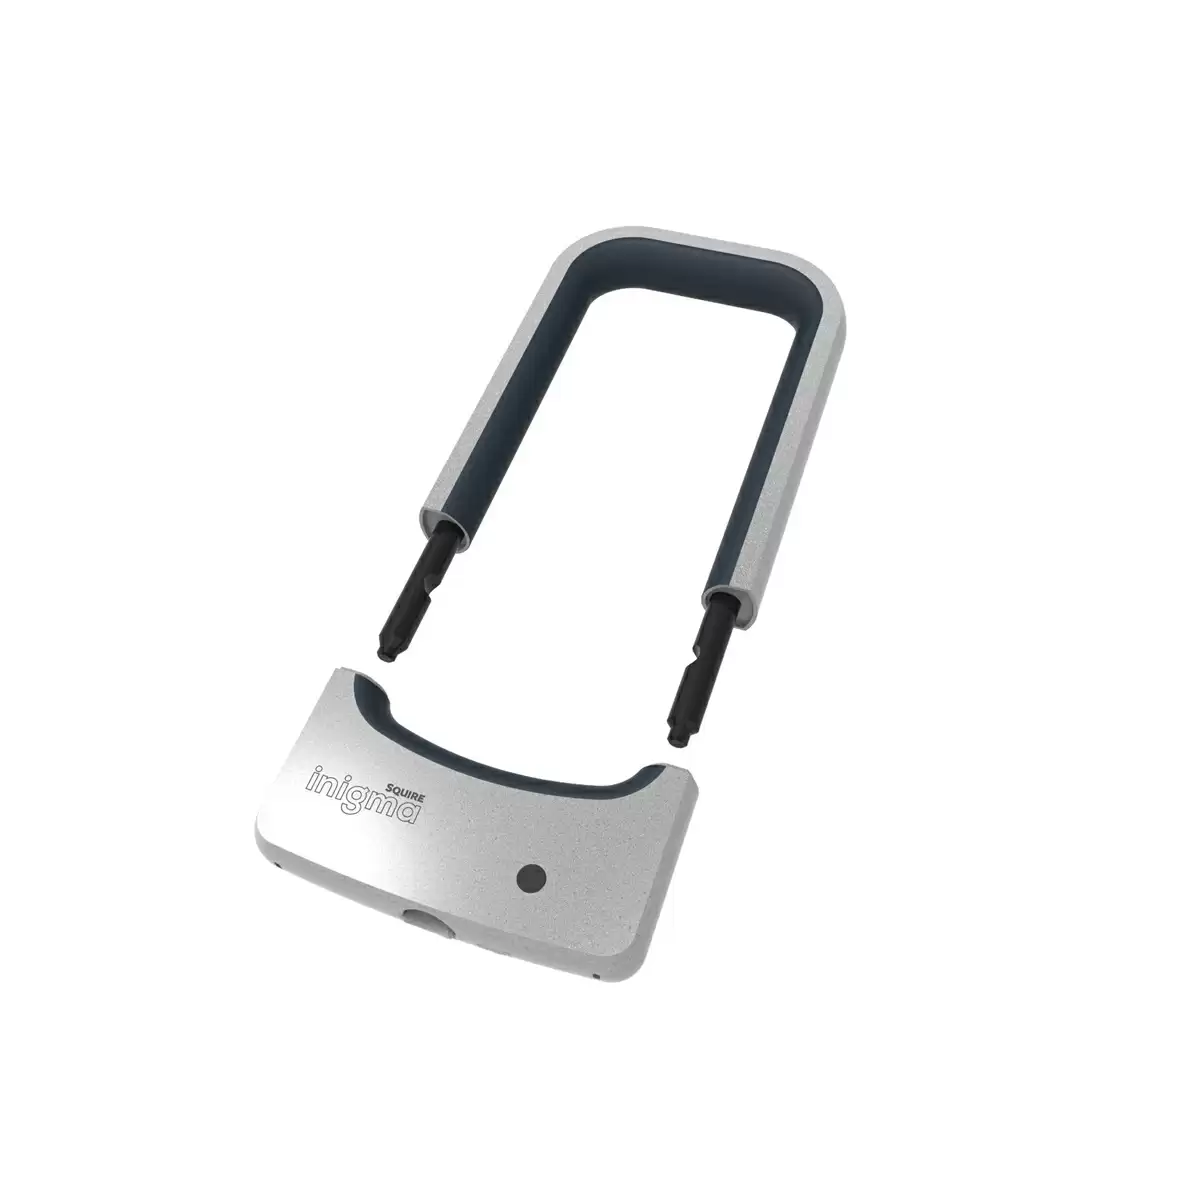 Bluetooth Bikelock Inigma BL1 190mm aberto/fechado com Smartphone - image